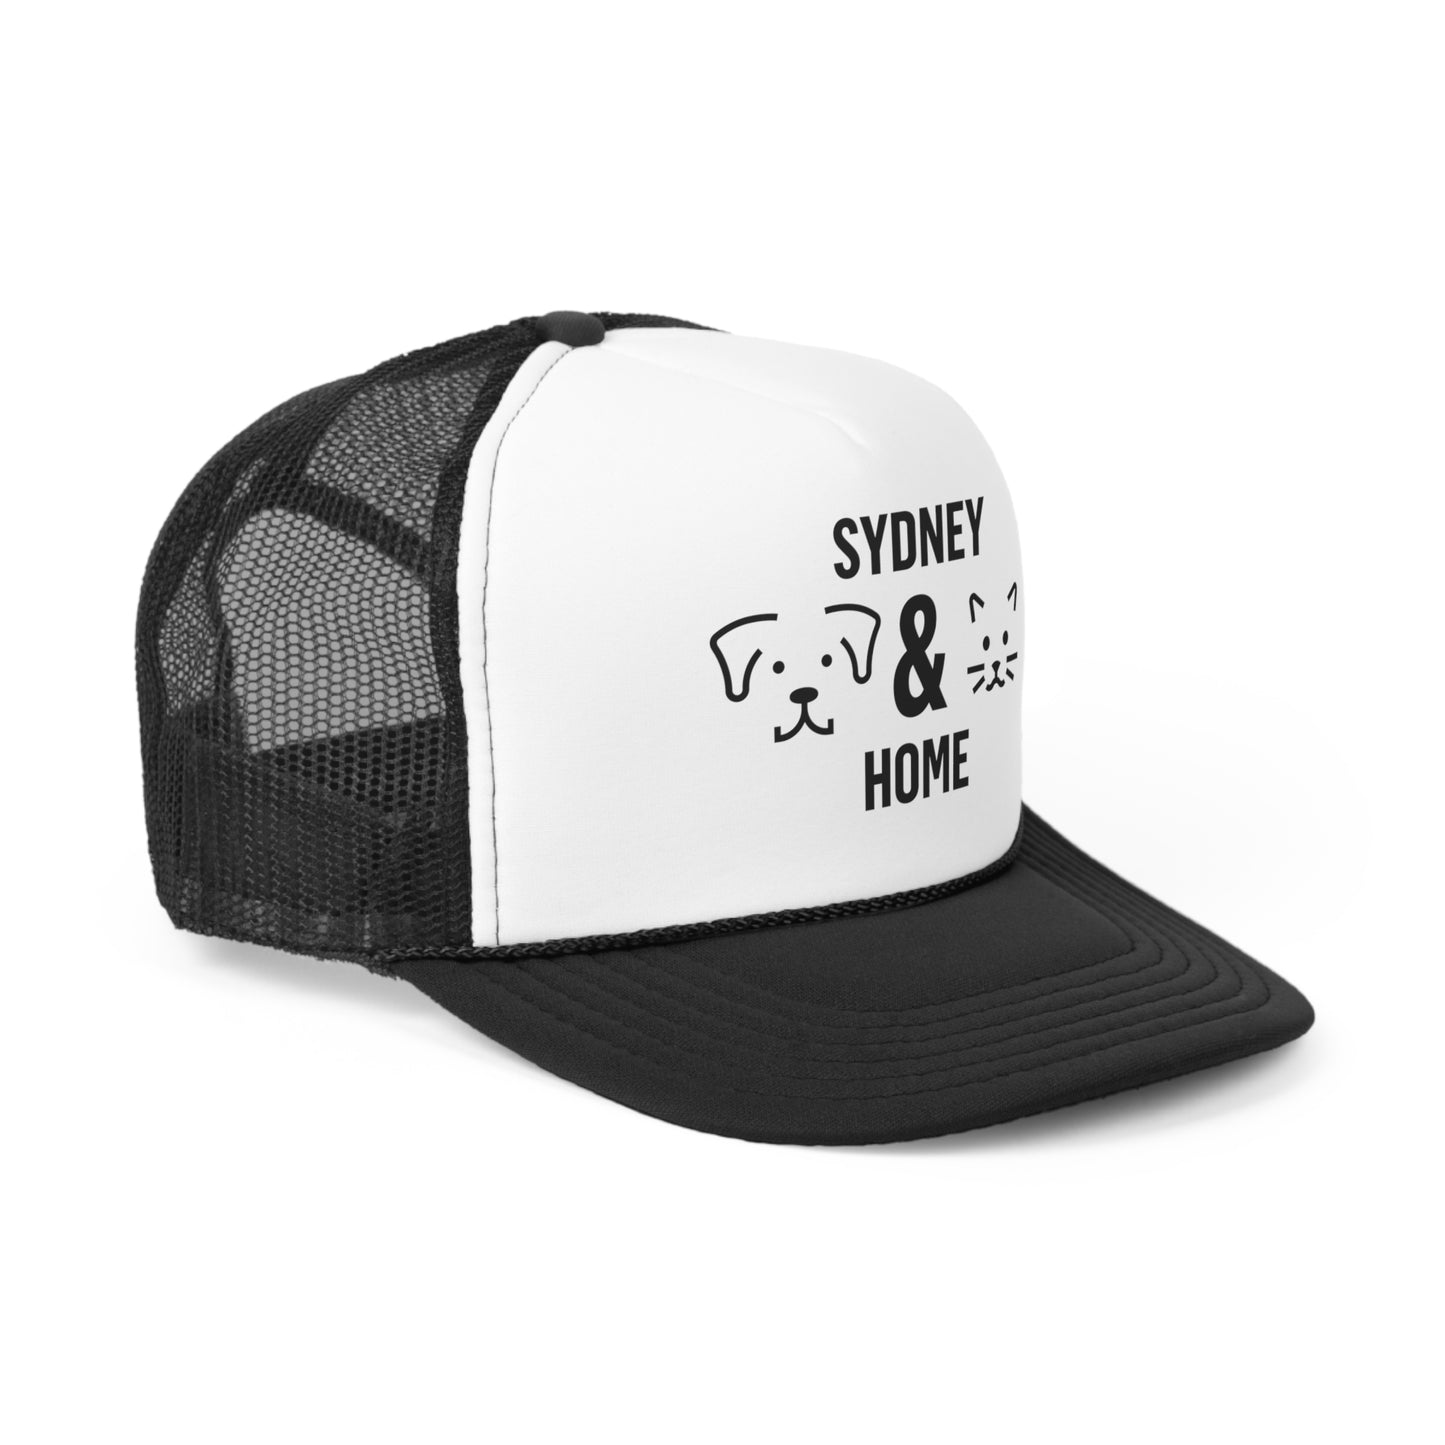 Trucker Cap - Sydney Dogs & Cats Home